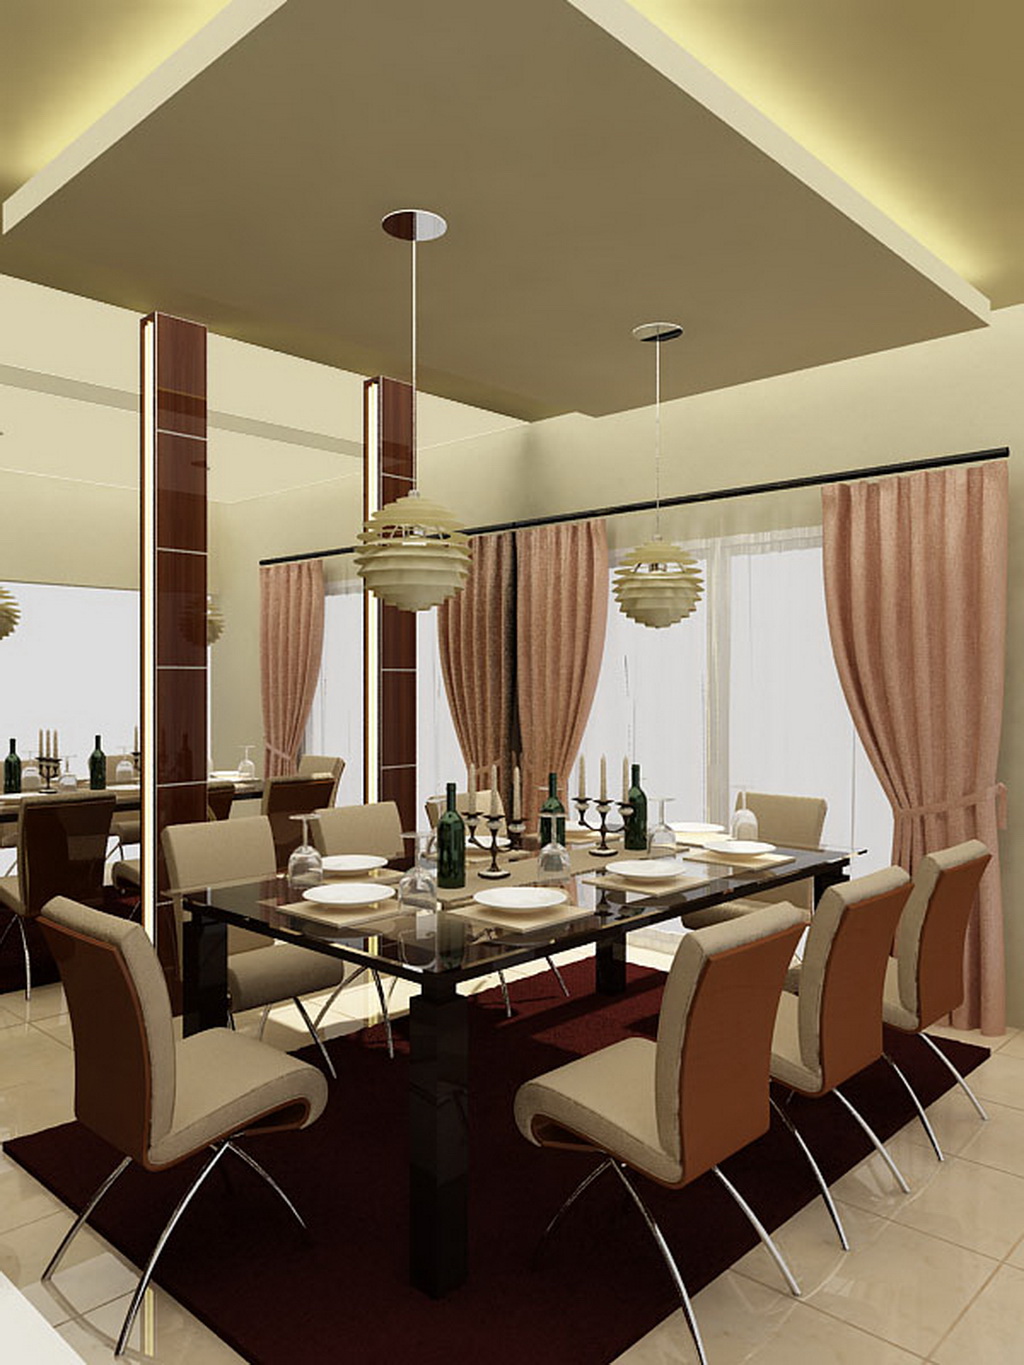 Attractive Contemporary Dining Room Design